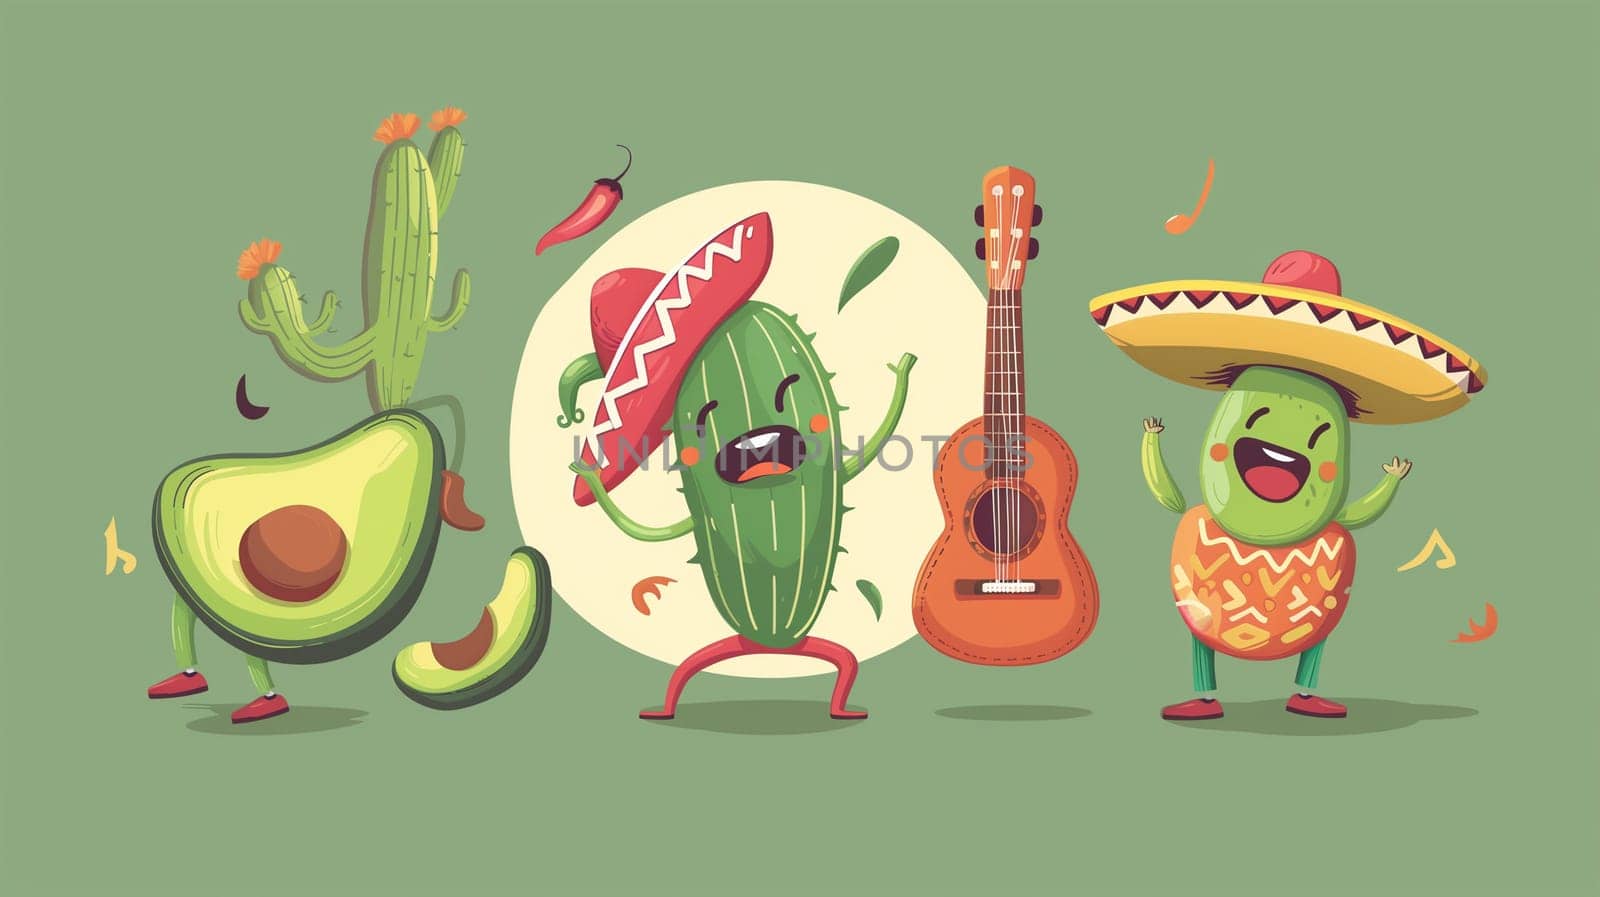 Celebrating Cinco De Mayo With Joyful Cartoon Avocado, Pepper, and Cactus Characters by Sd28DimoN_1976